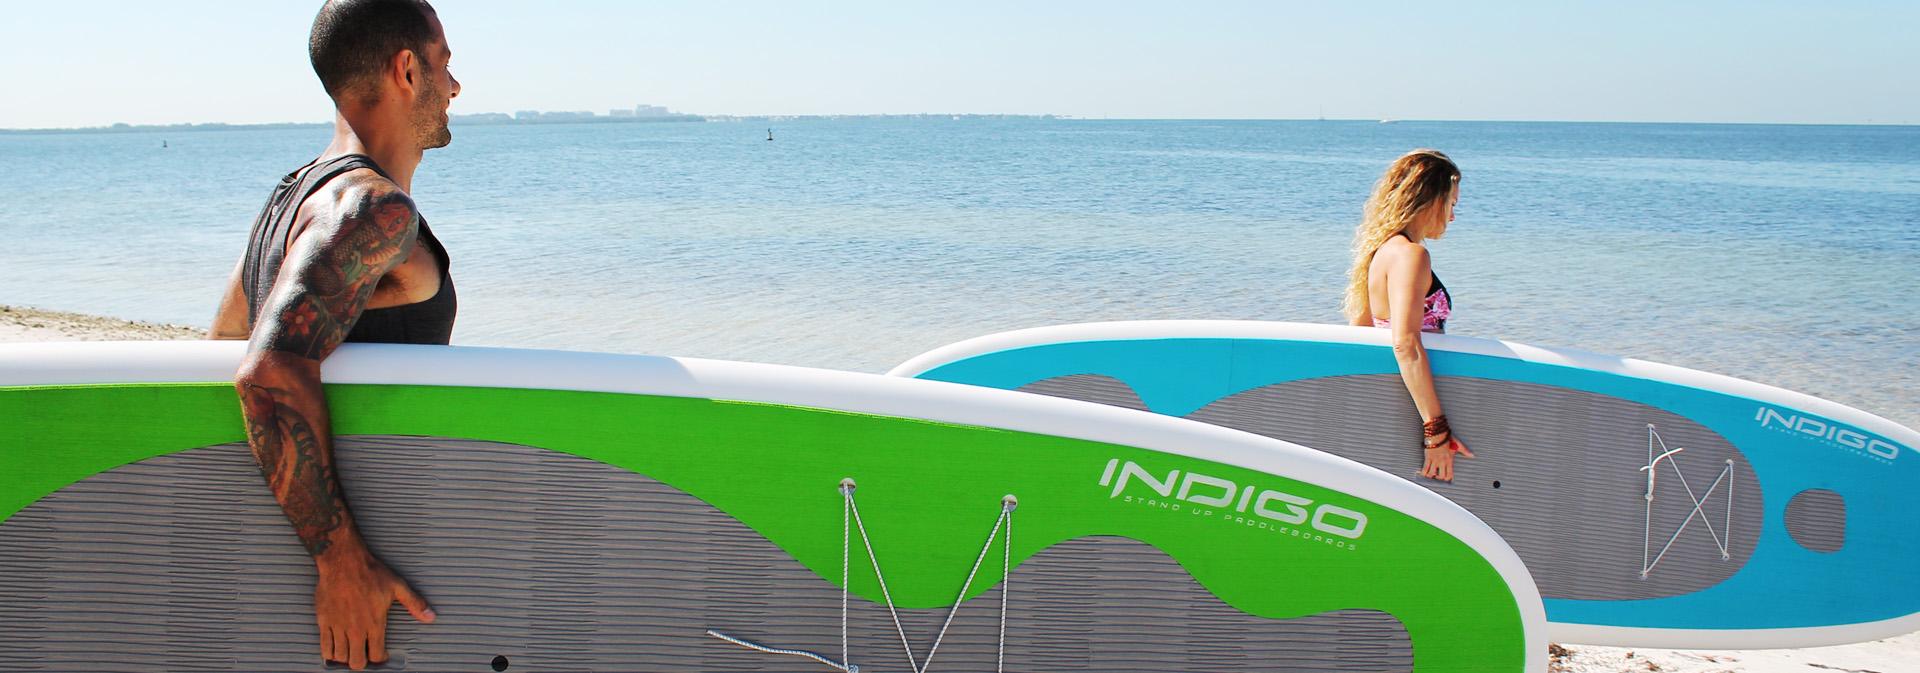 Seagul Indigo SUP Race Boards Stand Up Paddleboards Indigo Custom made Boards